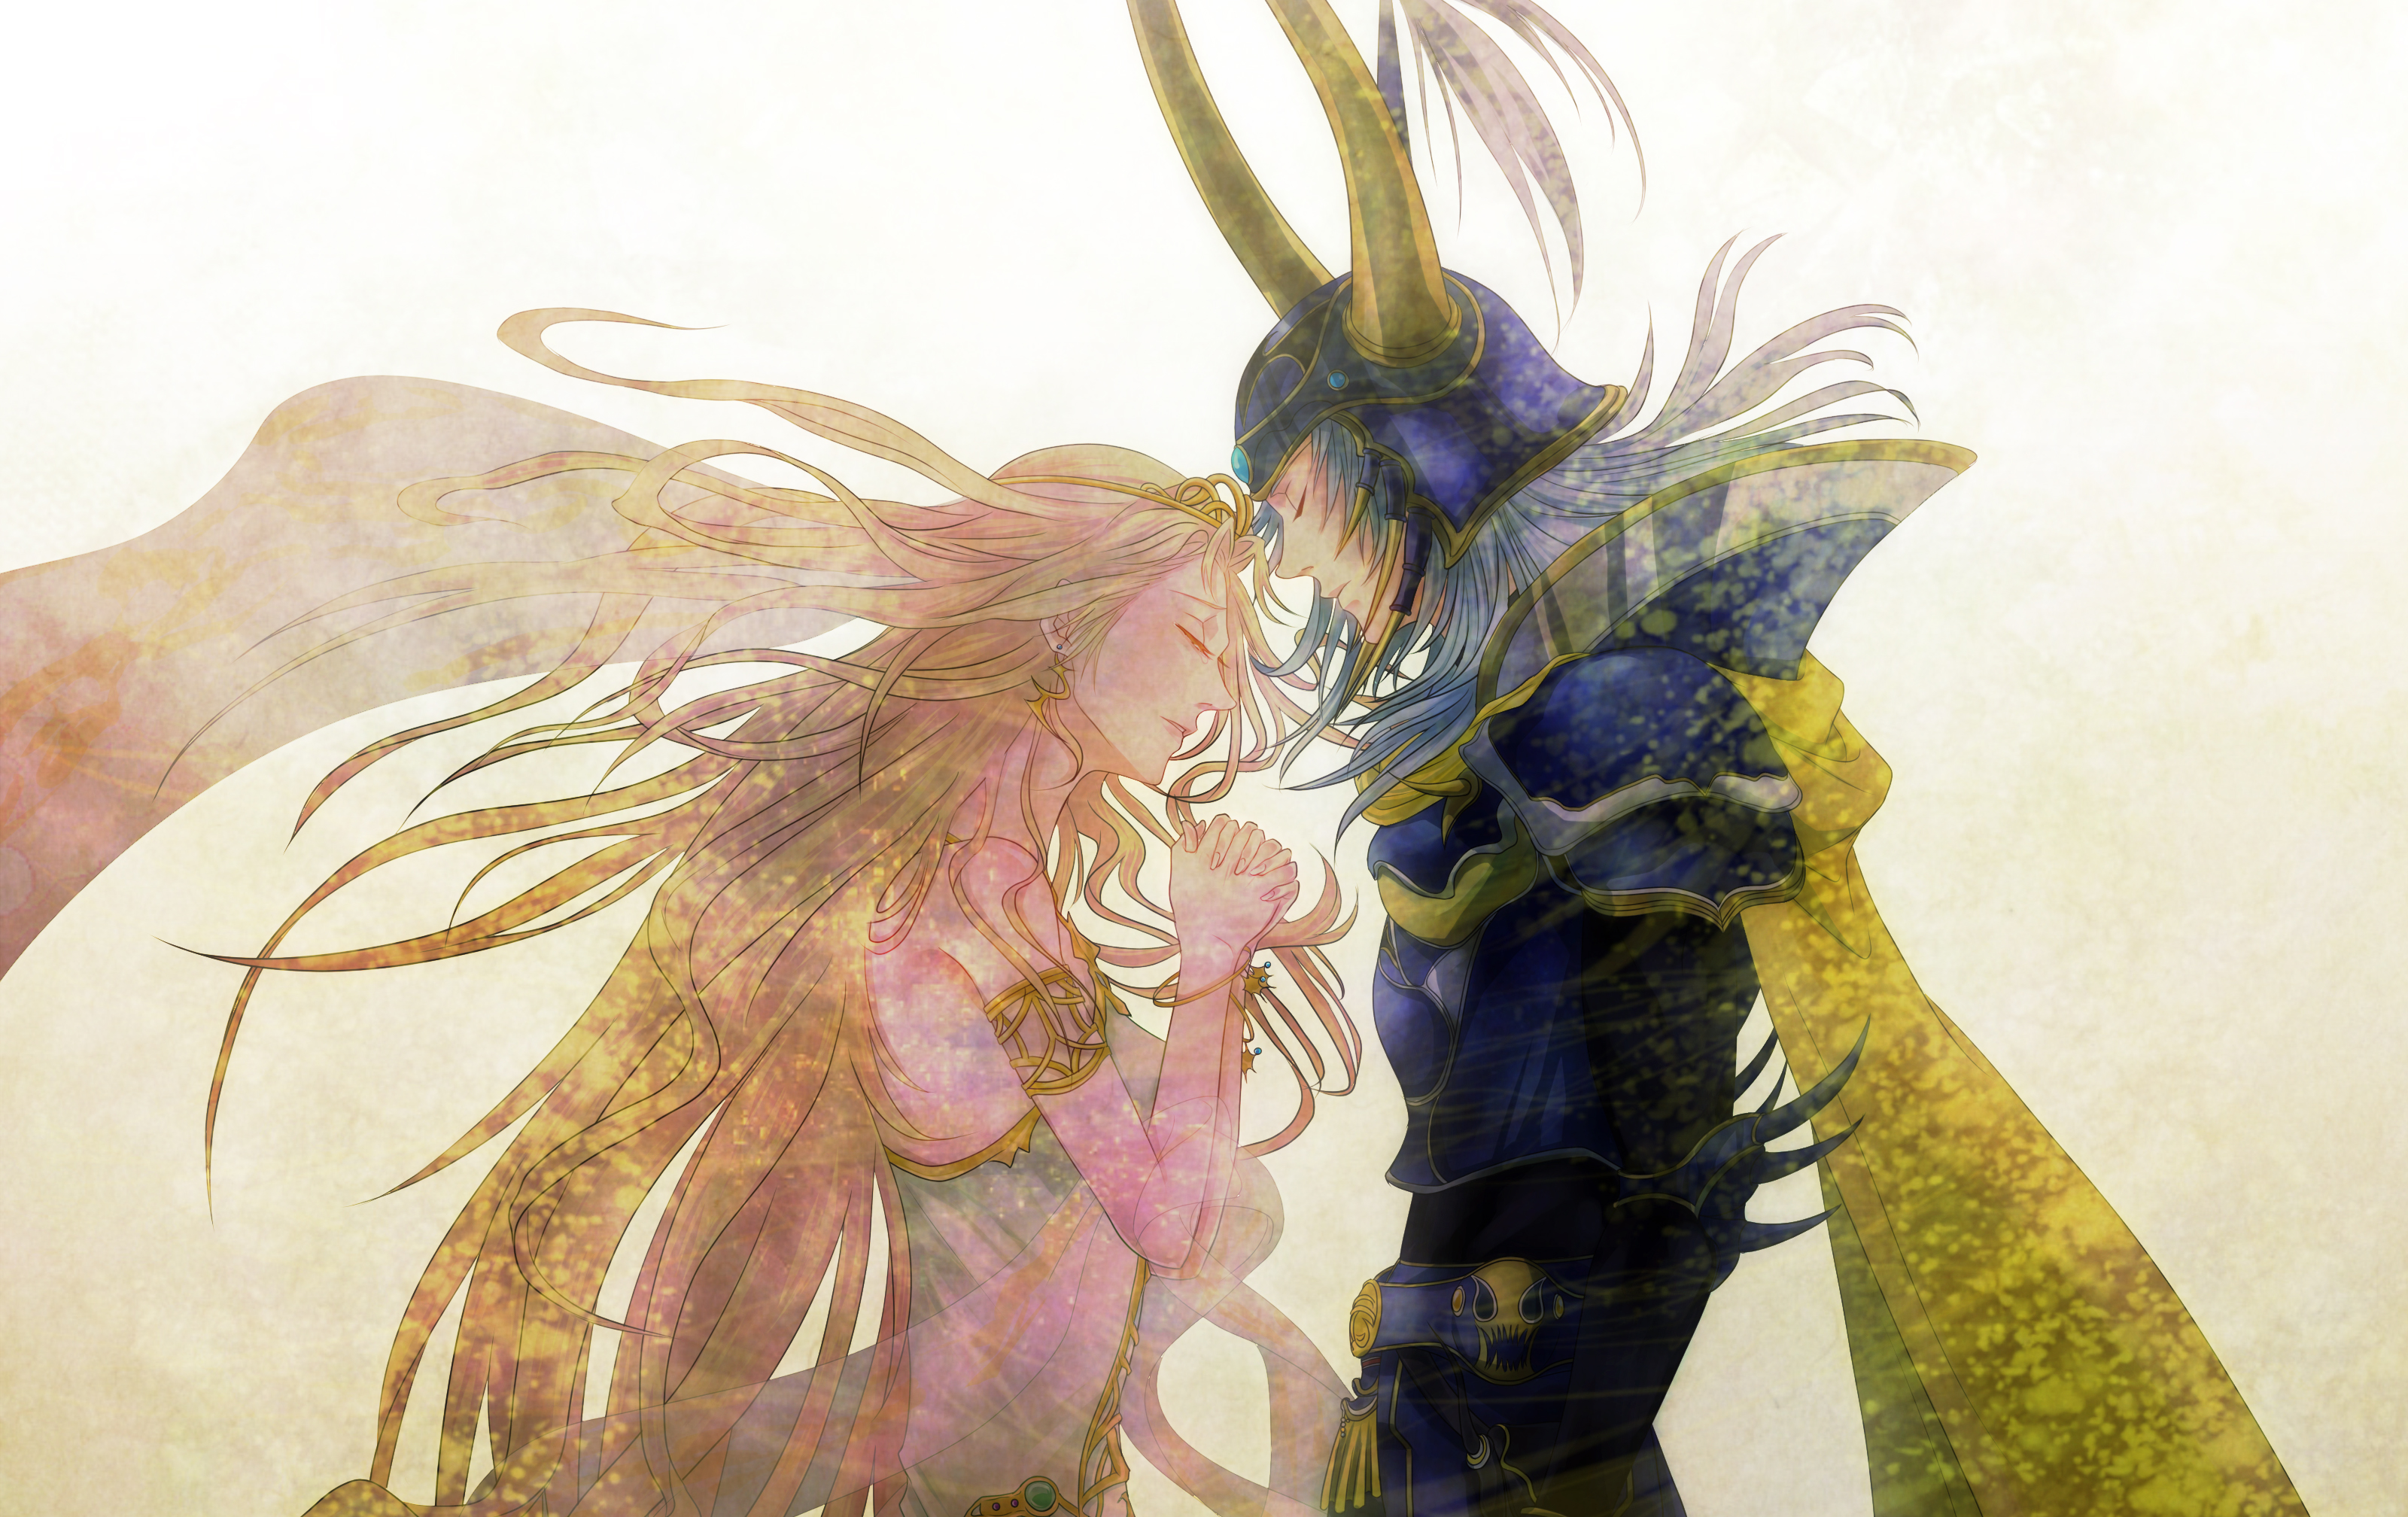 Cosmos Final Fantasy Final Fantasy Warrior Of Light Final Fantasy 3200x2016